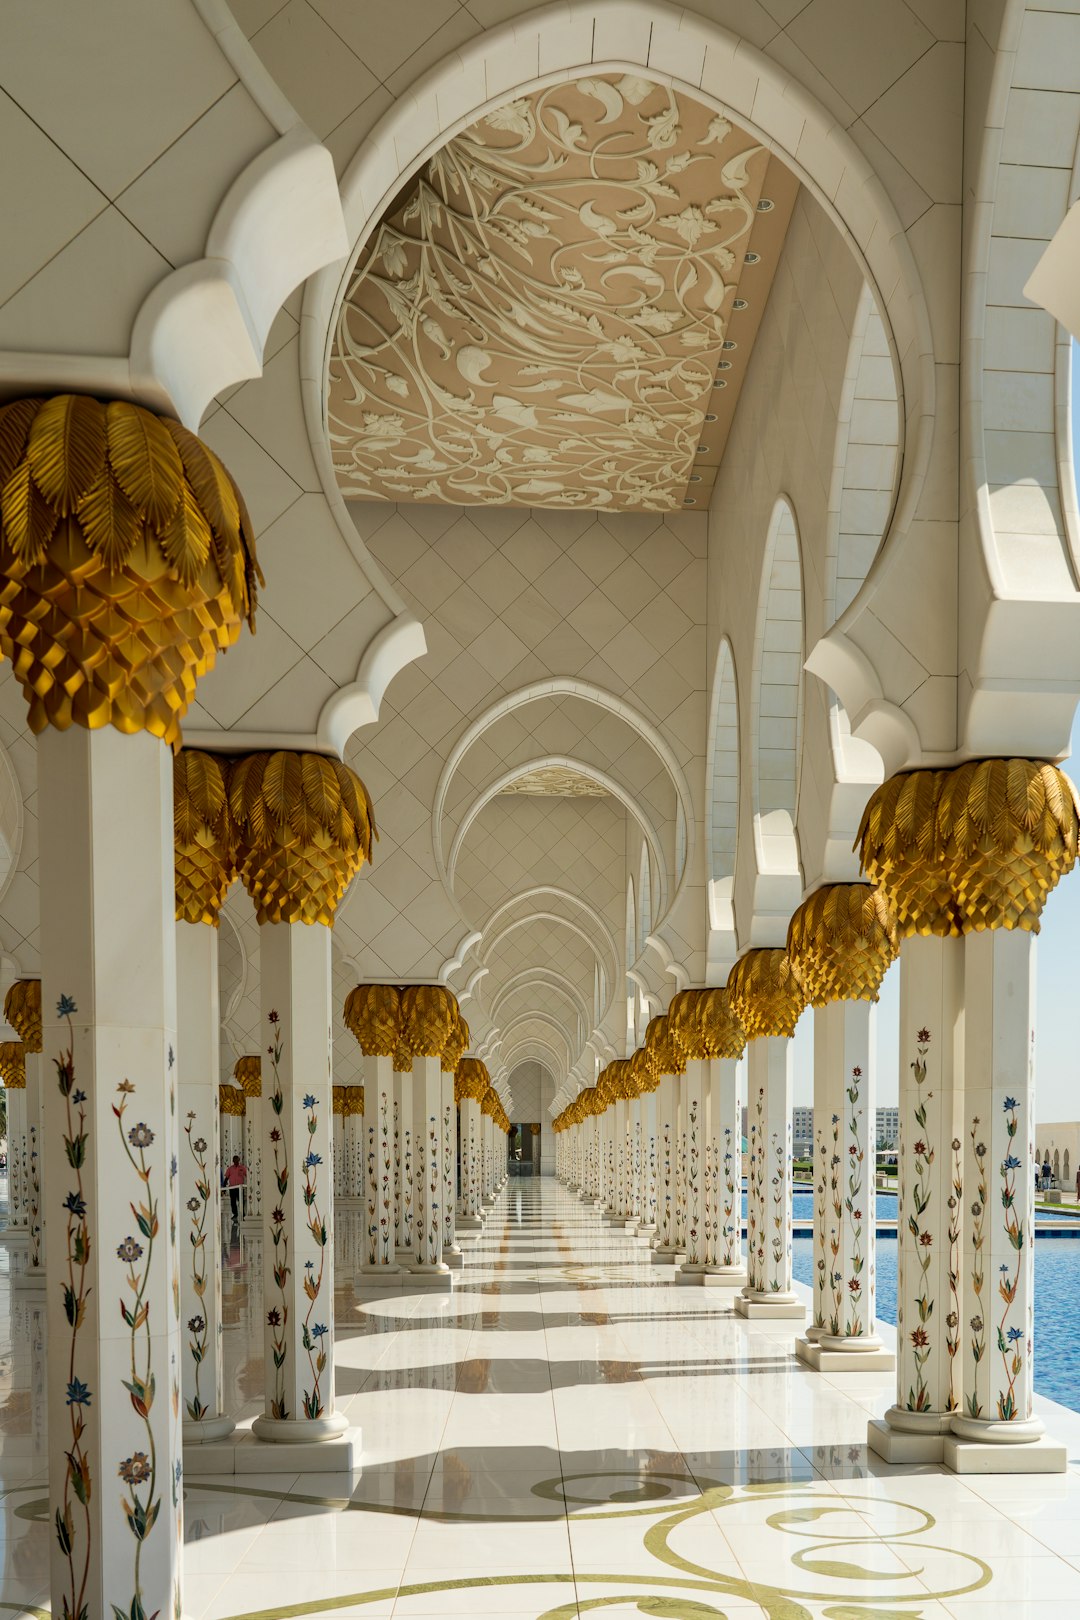 Place of worship photo spot Sheikh Zayed Grand Mosque - 5th St - Abu Dhabi - United Arab Emirates Al Dhafra - Abu Dhabi - United Arab Emirates